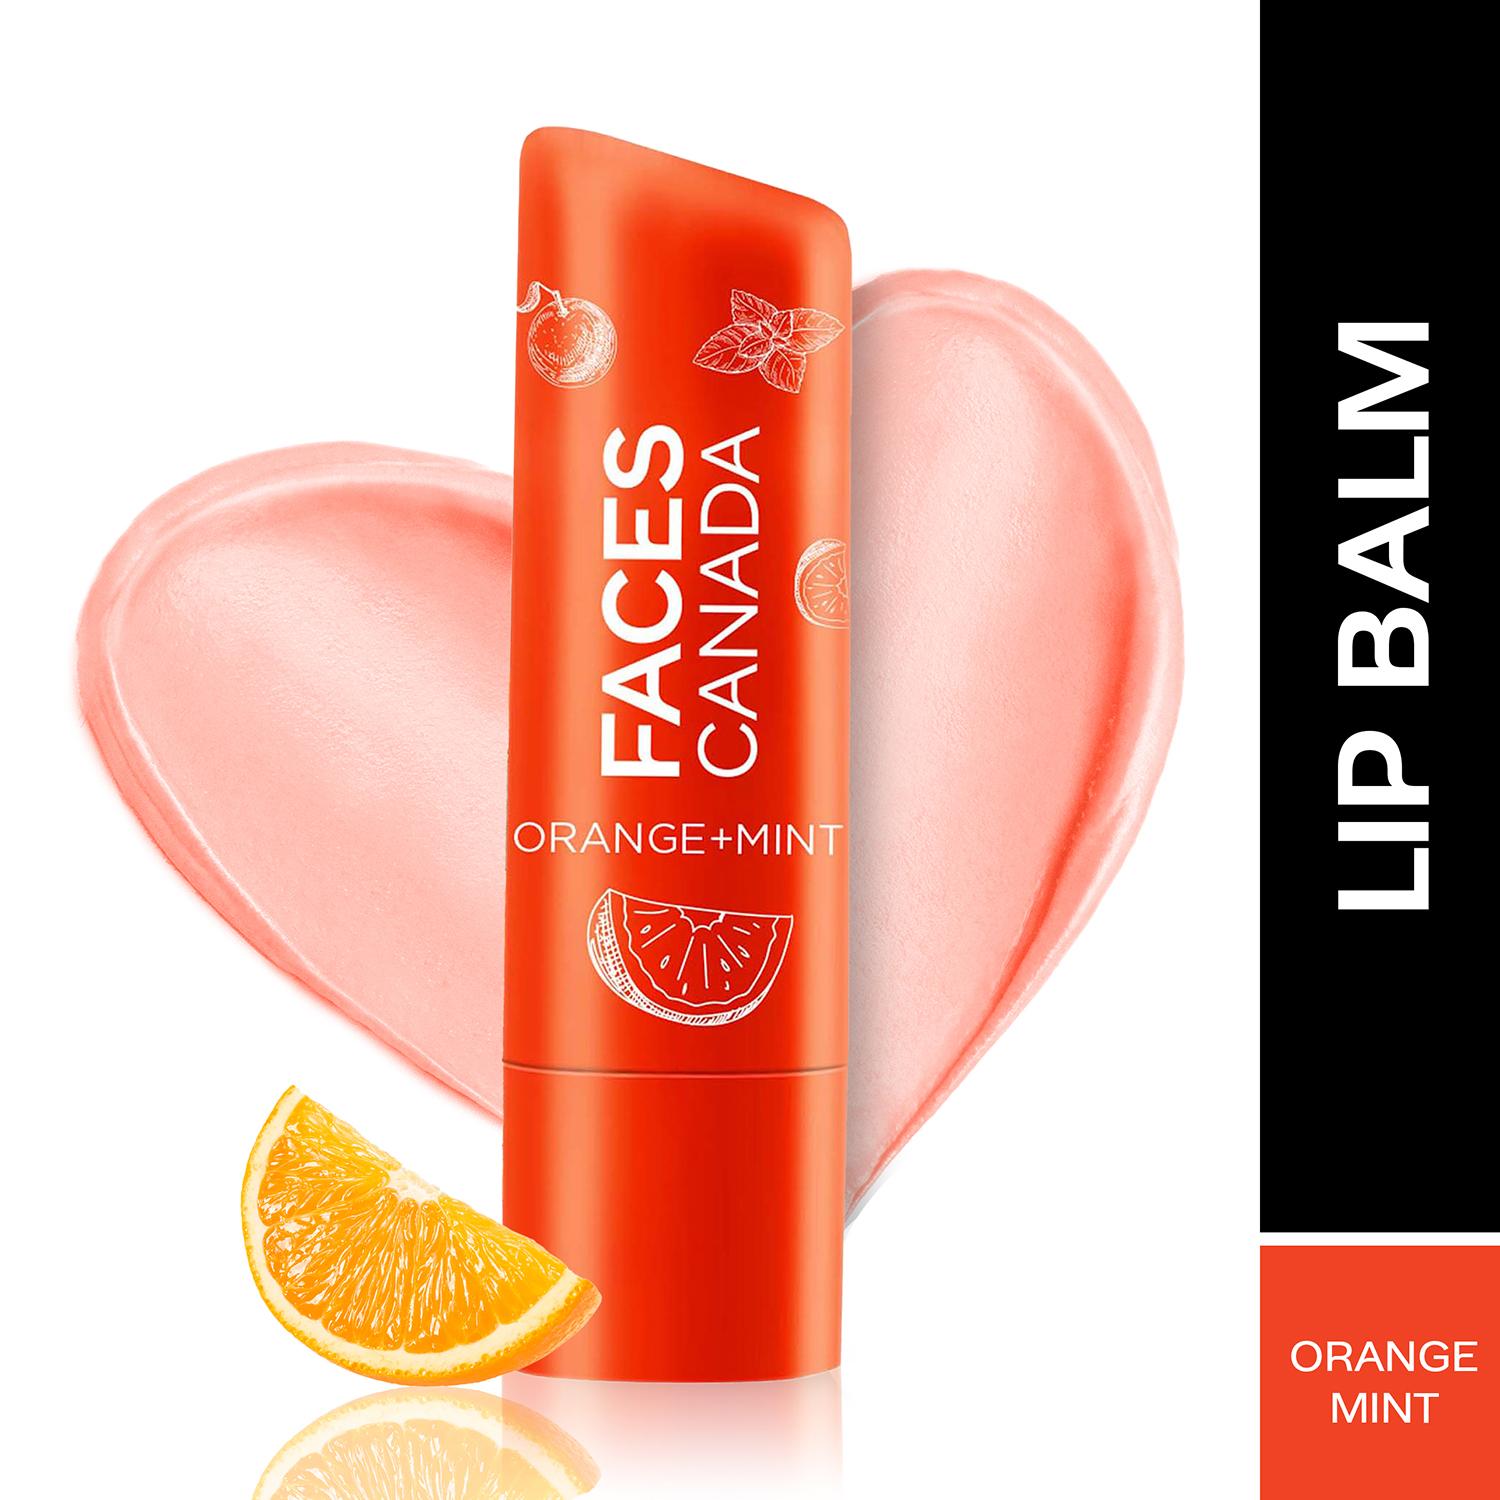 Faces Canada | Faces Canada Lip Balm - Orange Mint 01, Orange Tint, SPF 15, 12 HR Moisturization (4.5 g)